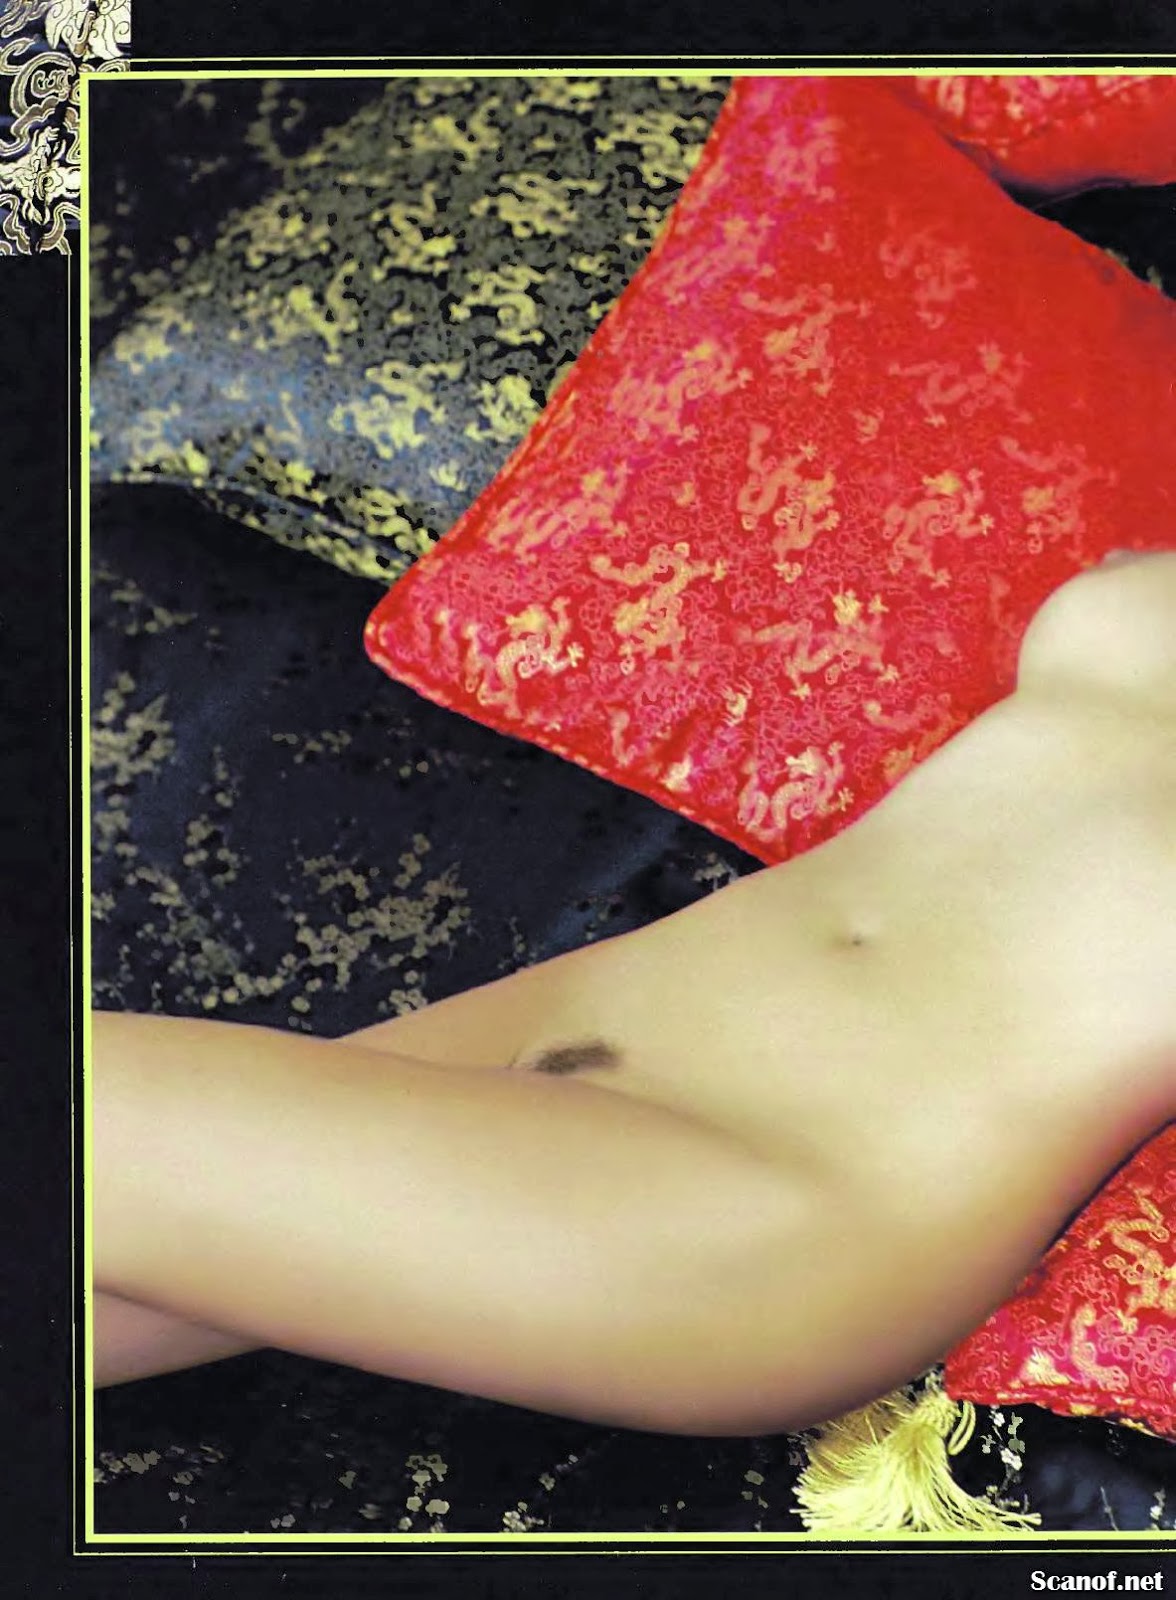 Belinda Carlisle Playboy USA August 2001.